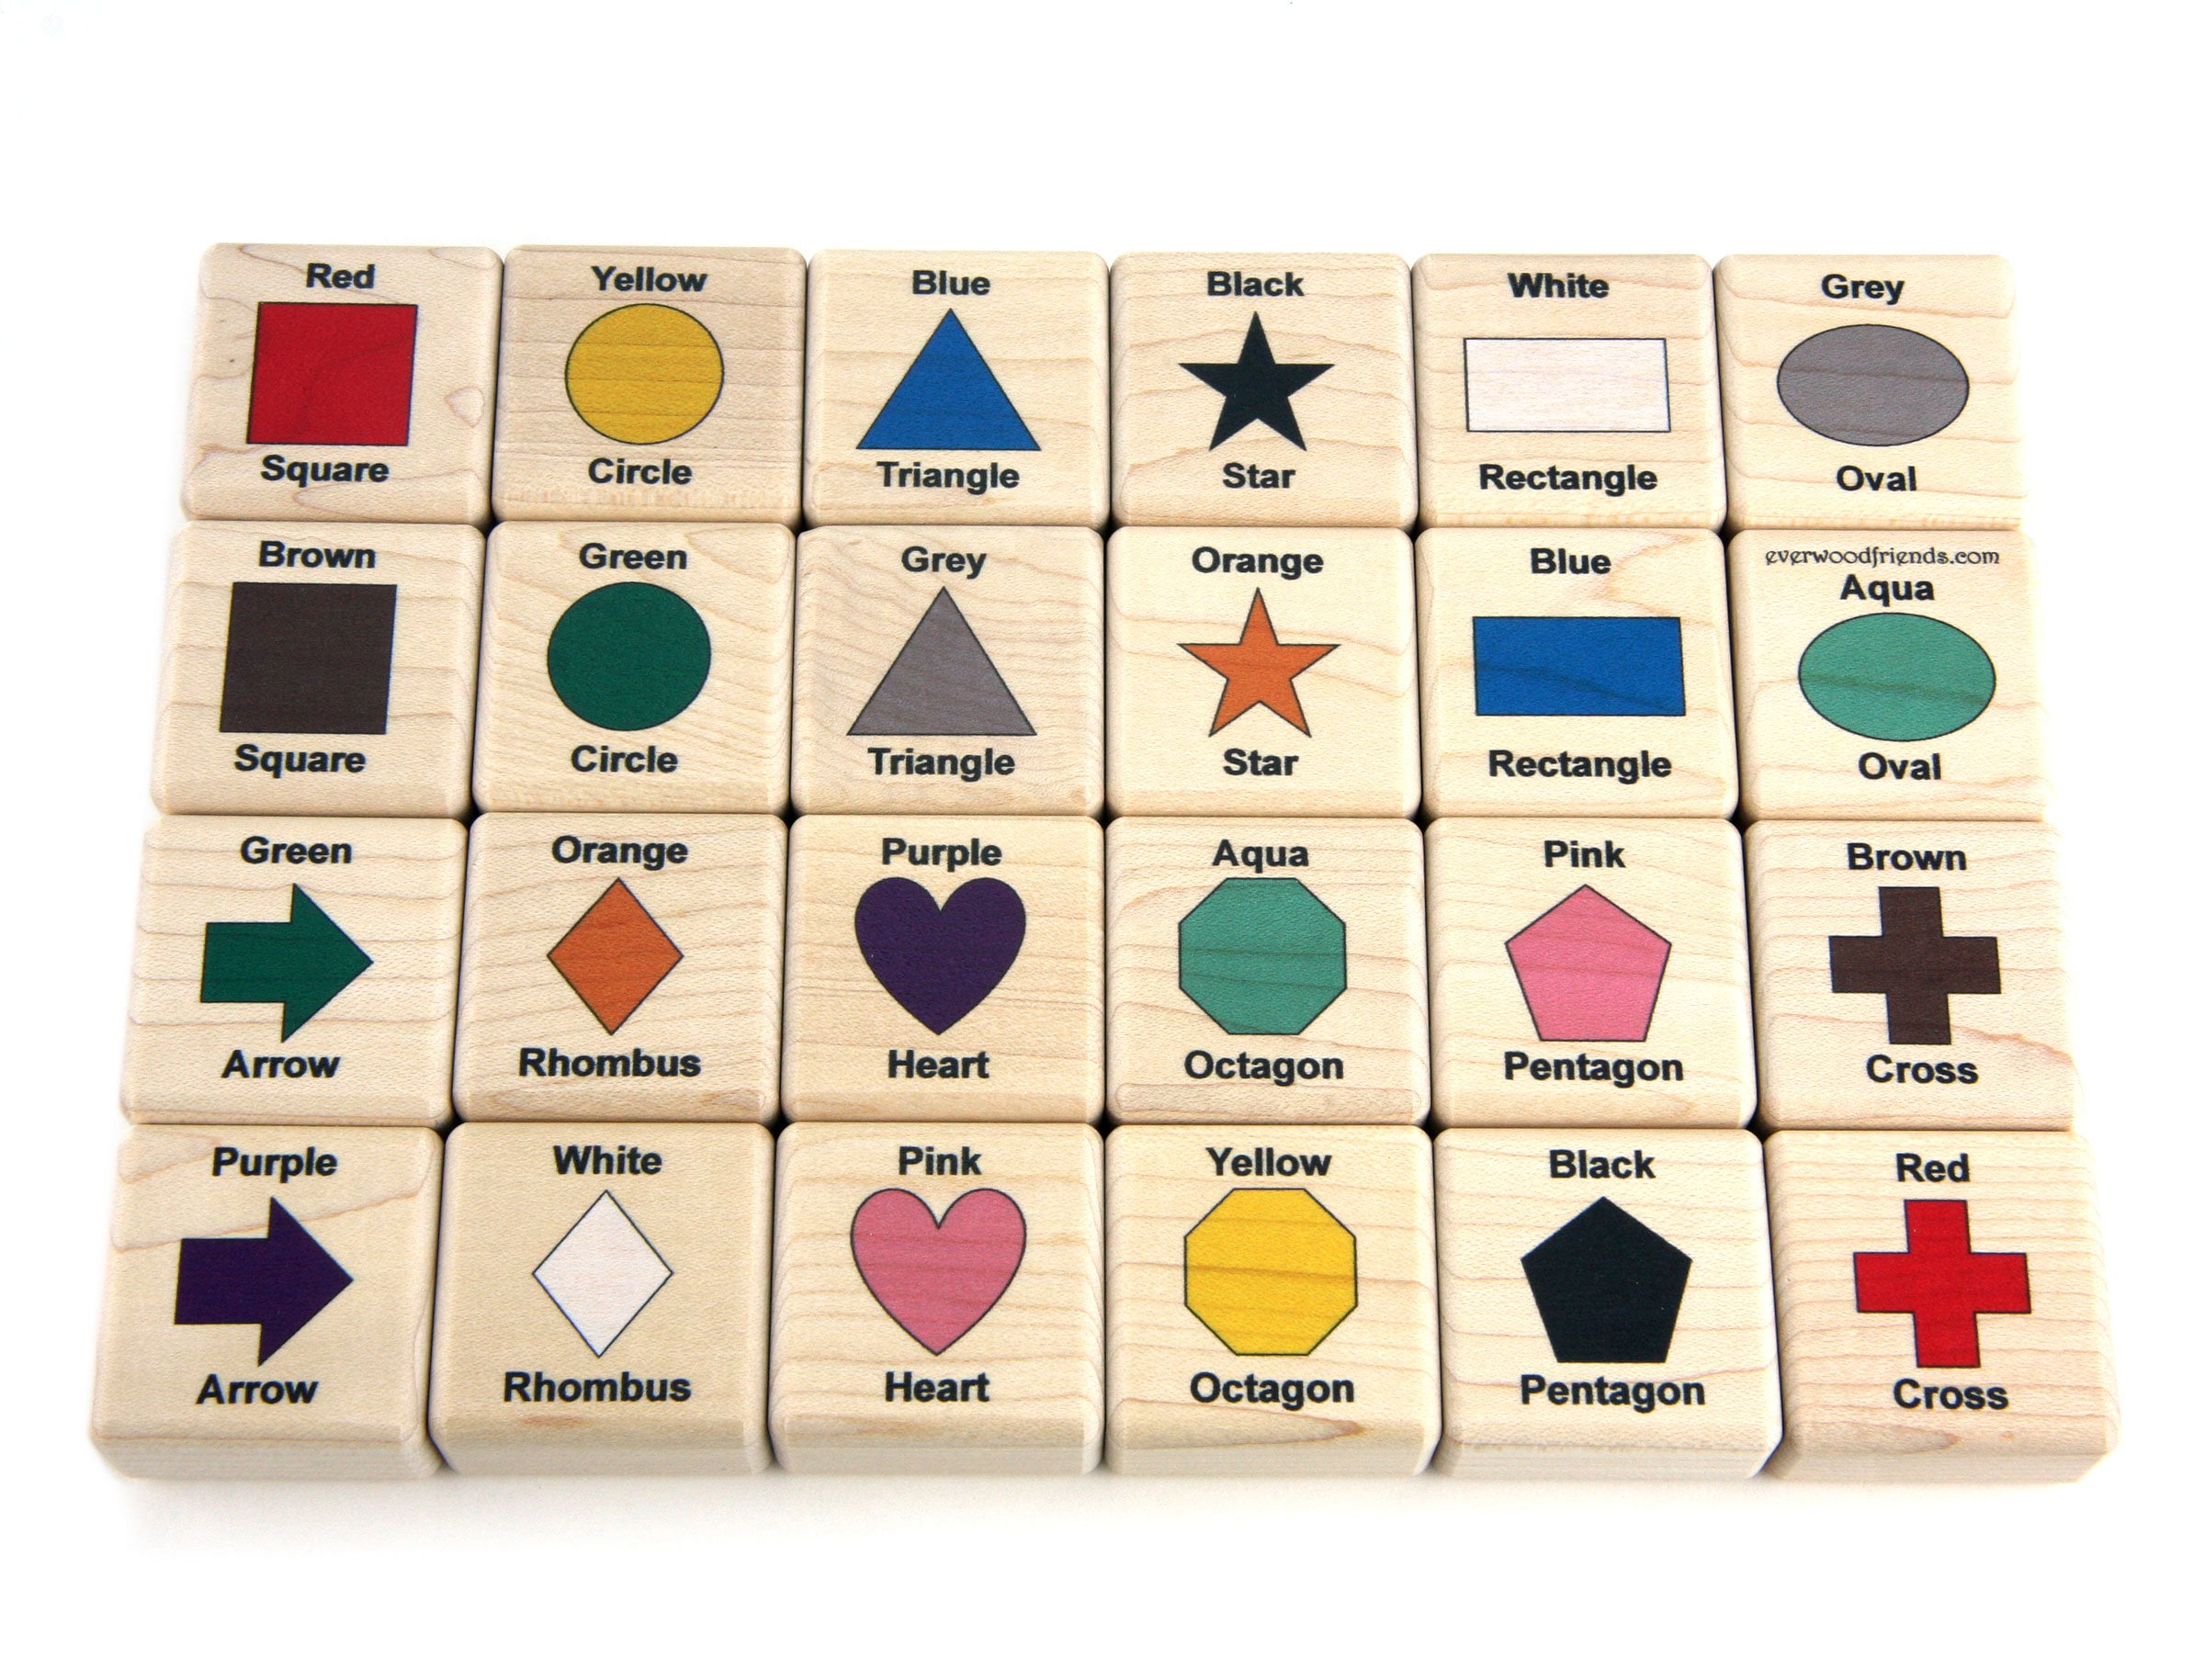 Musical Instruments Memory Game 24 Blocks Color Wood 